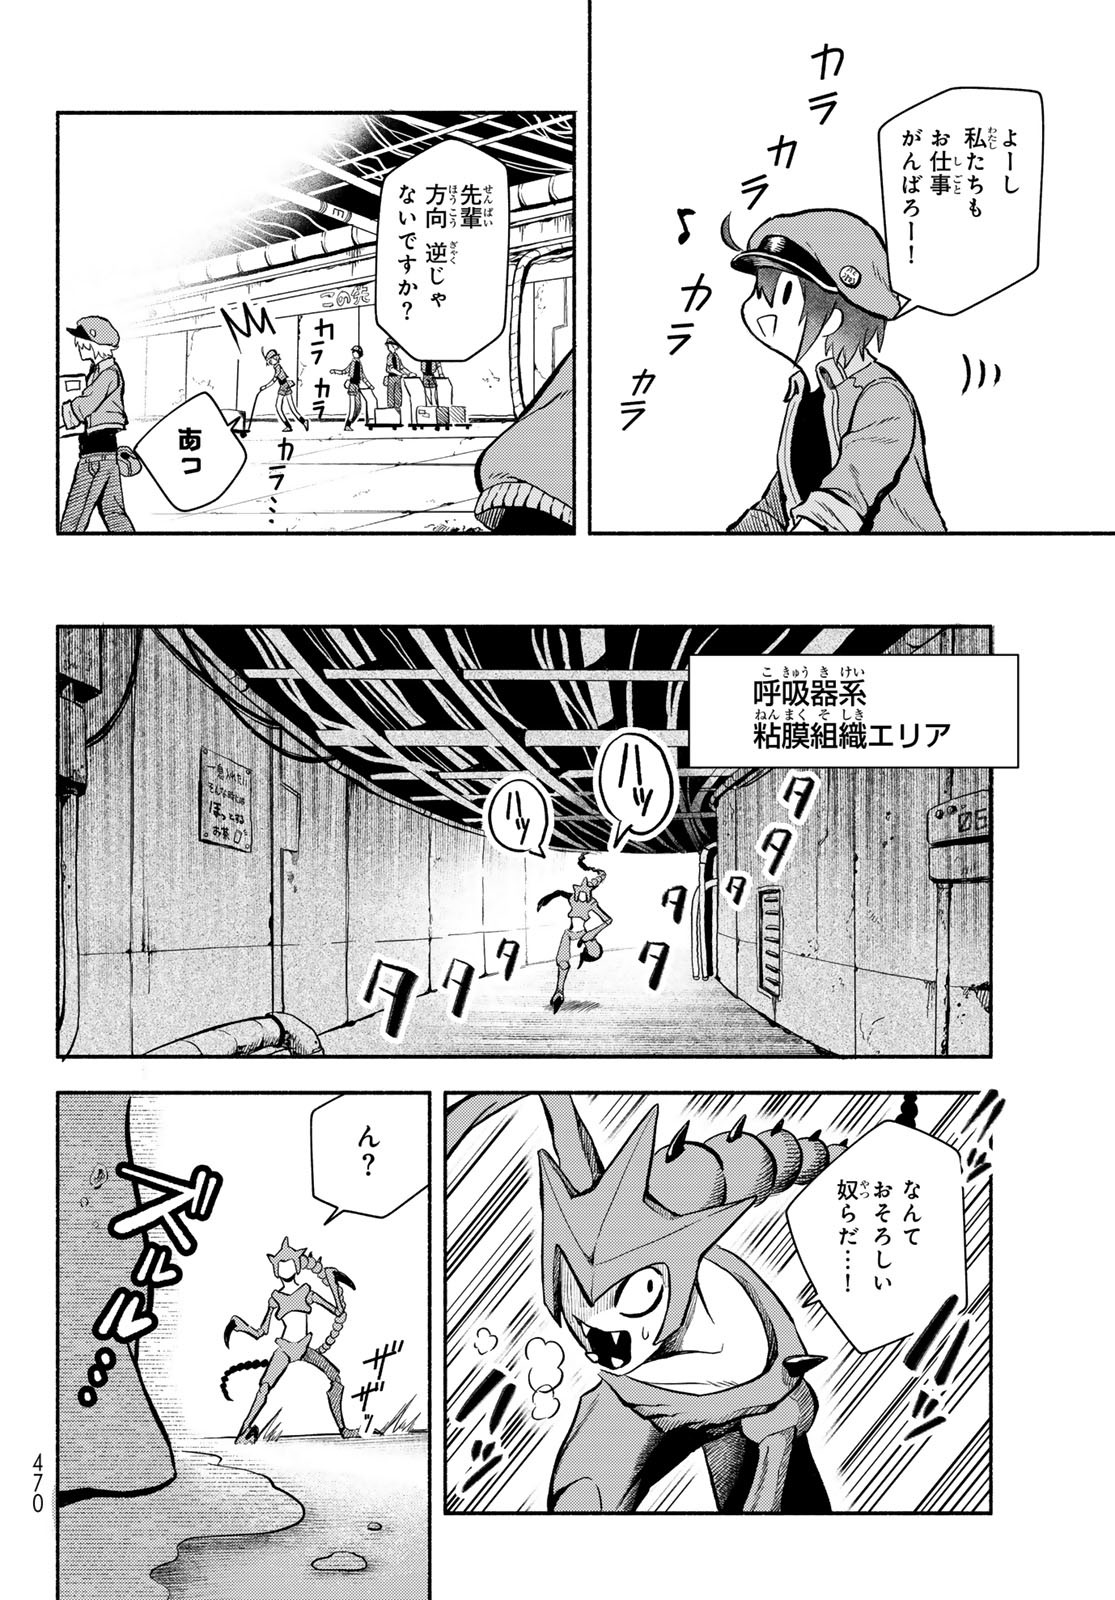 Hataraku Saibou Okusuri - Chapter 7.1 - Page 16